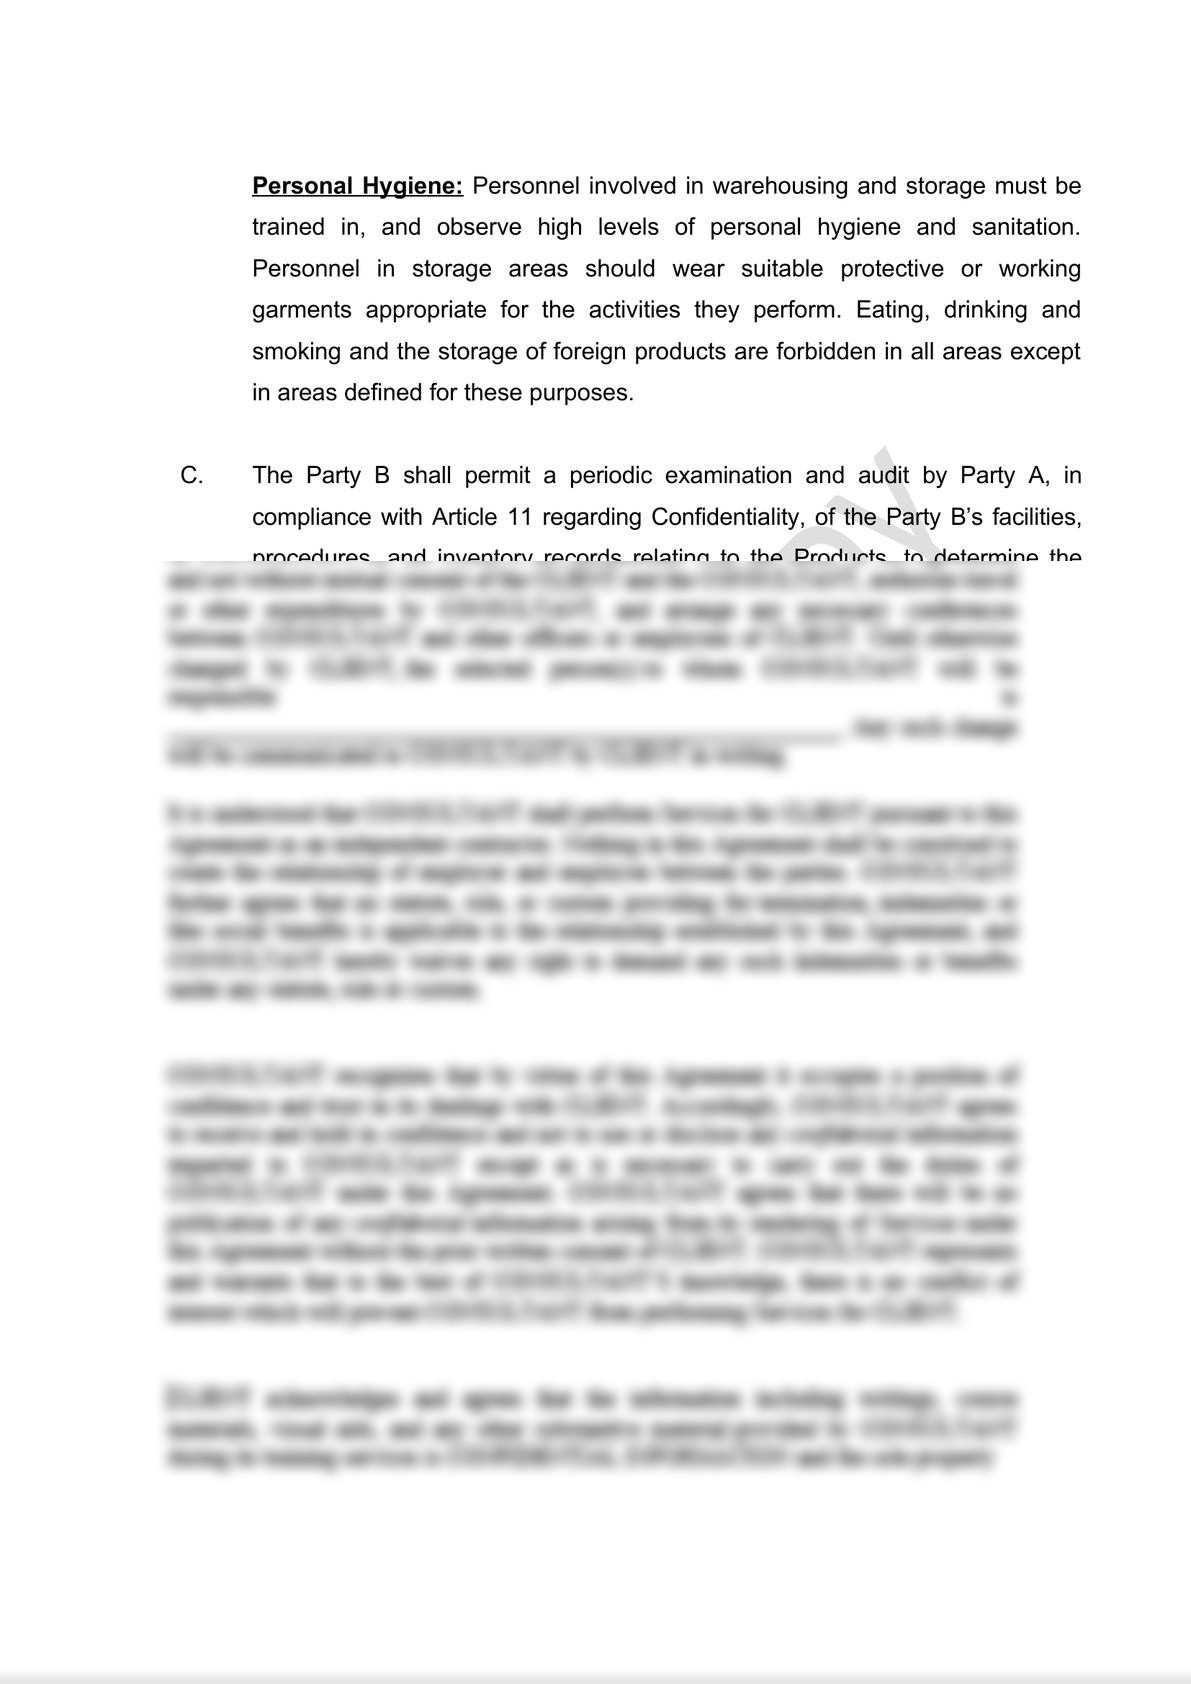 Distribution Agreement Draft (iii)-7